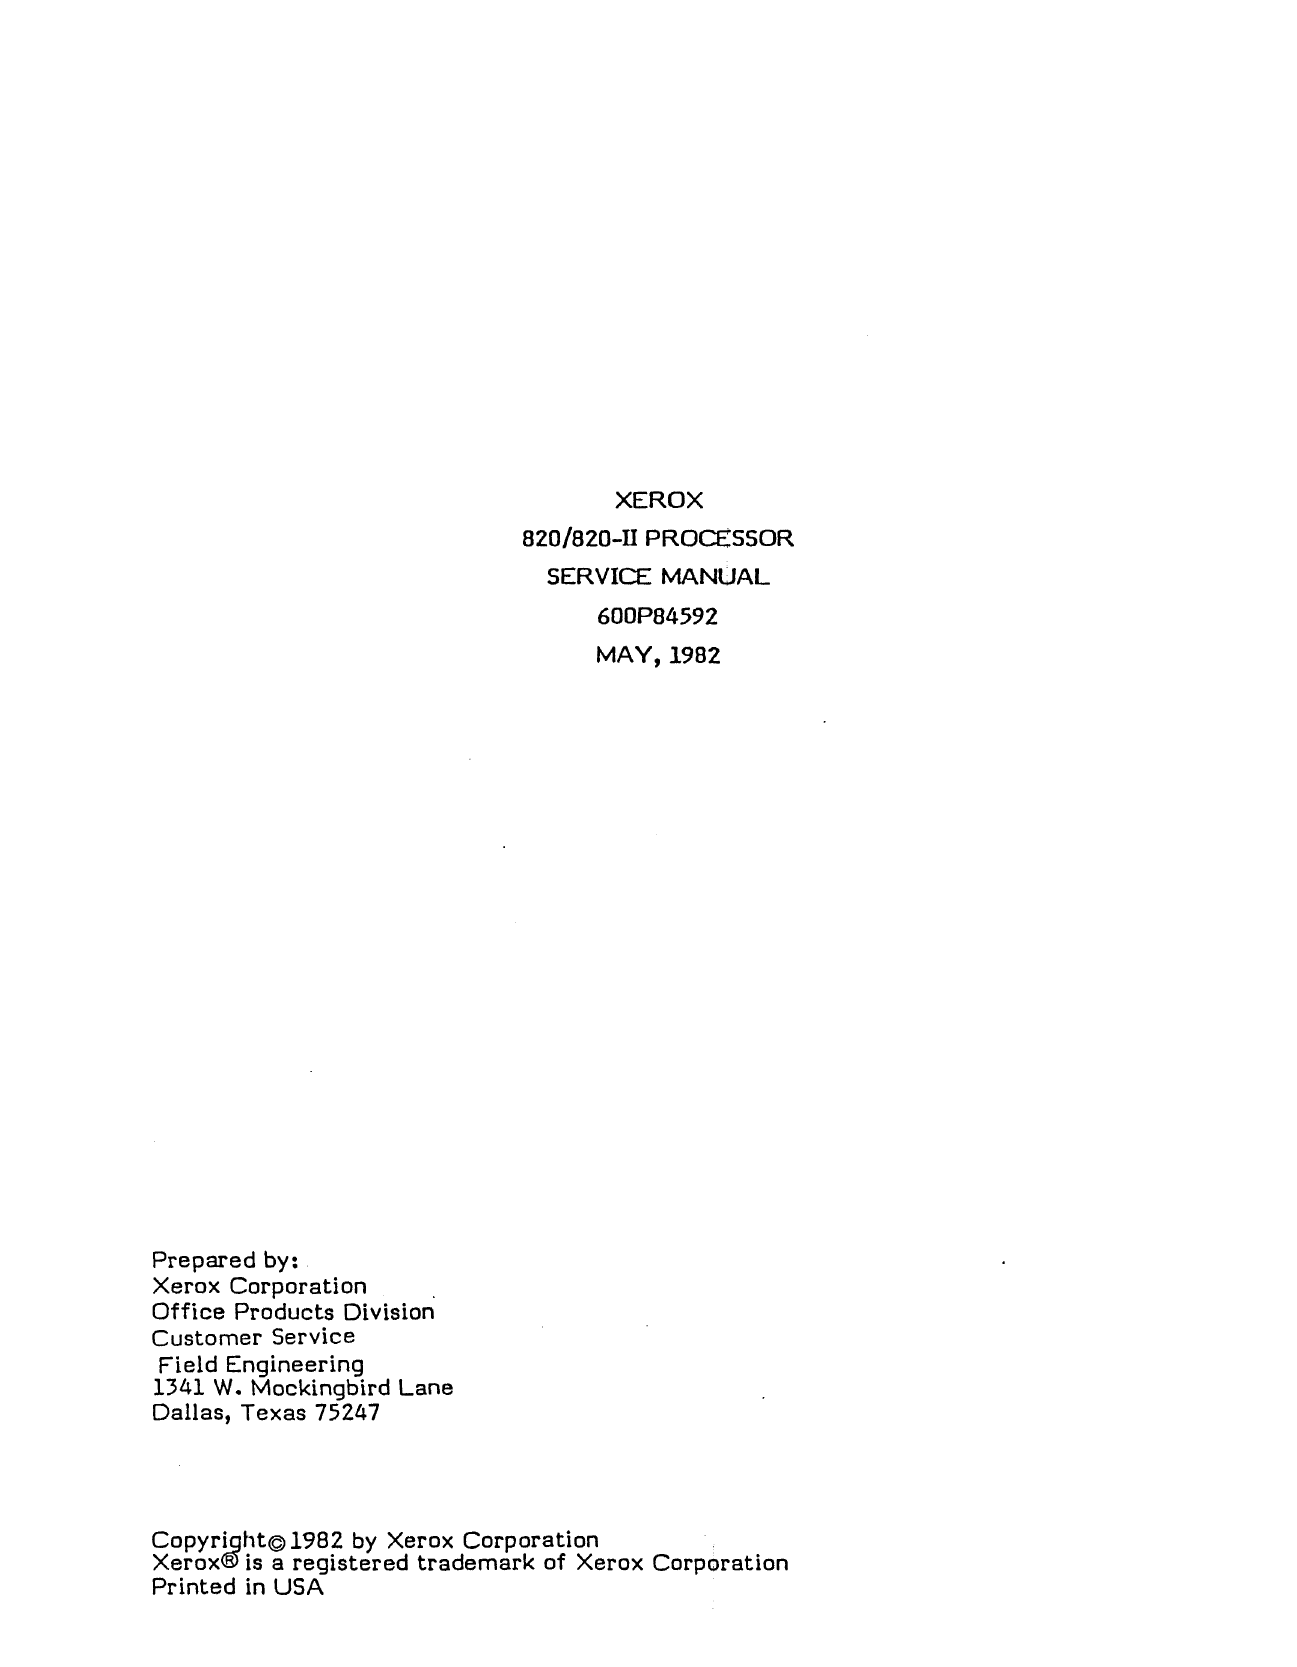 Xerox Printer PROCESSOR 820 820II Maintenance Service Manual-1